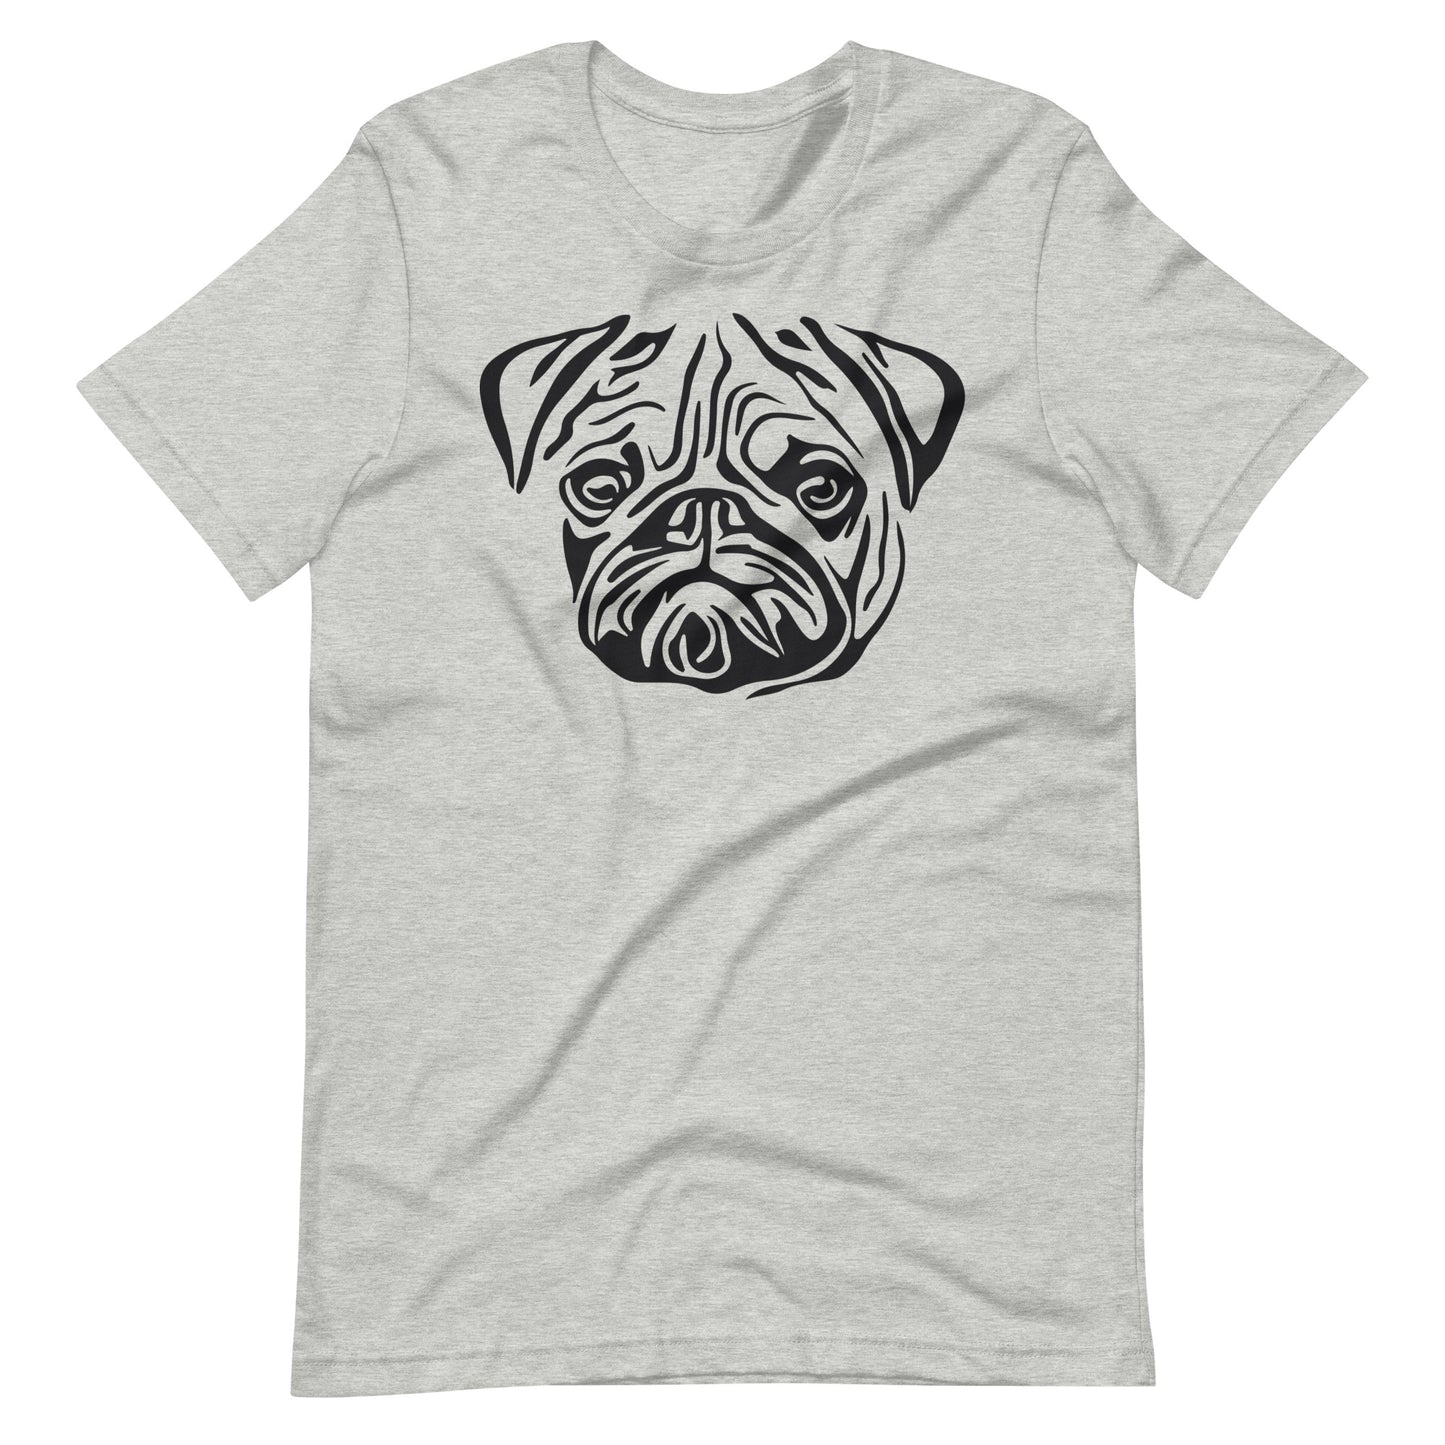 Black Pug face silhouette on unisex athletic heather t-shirt